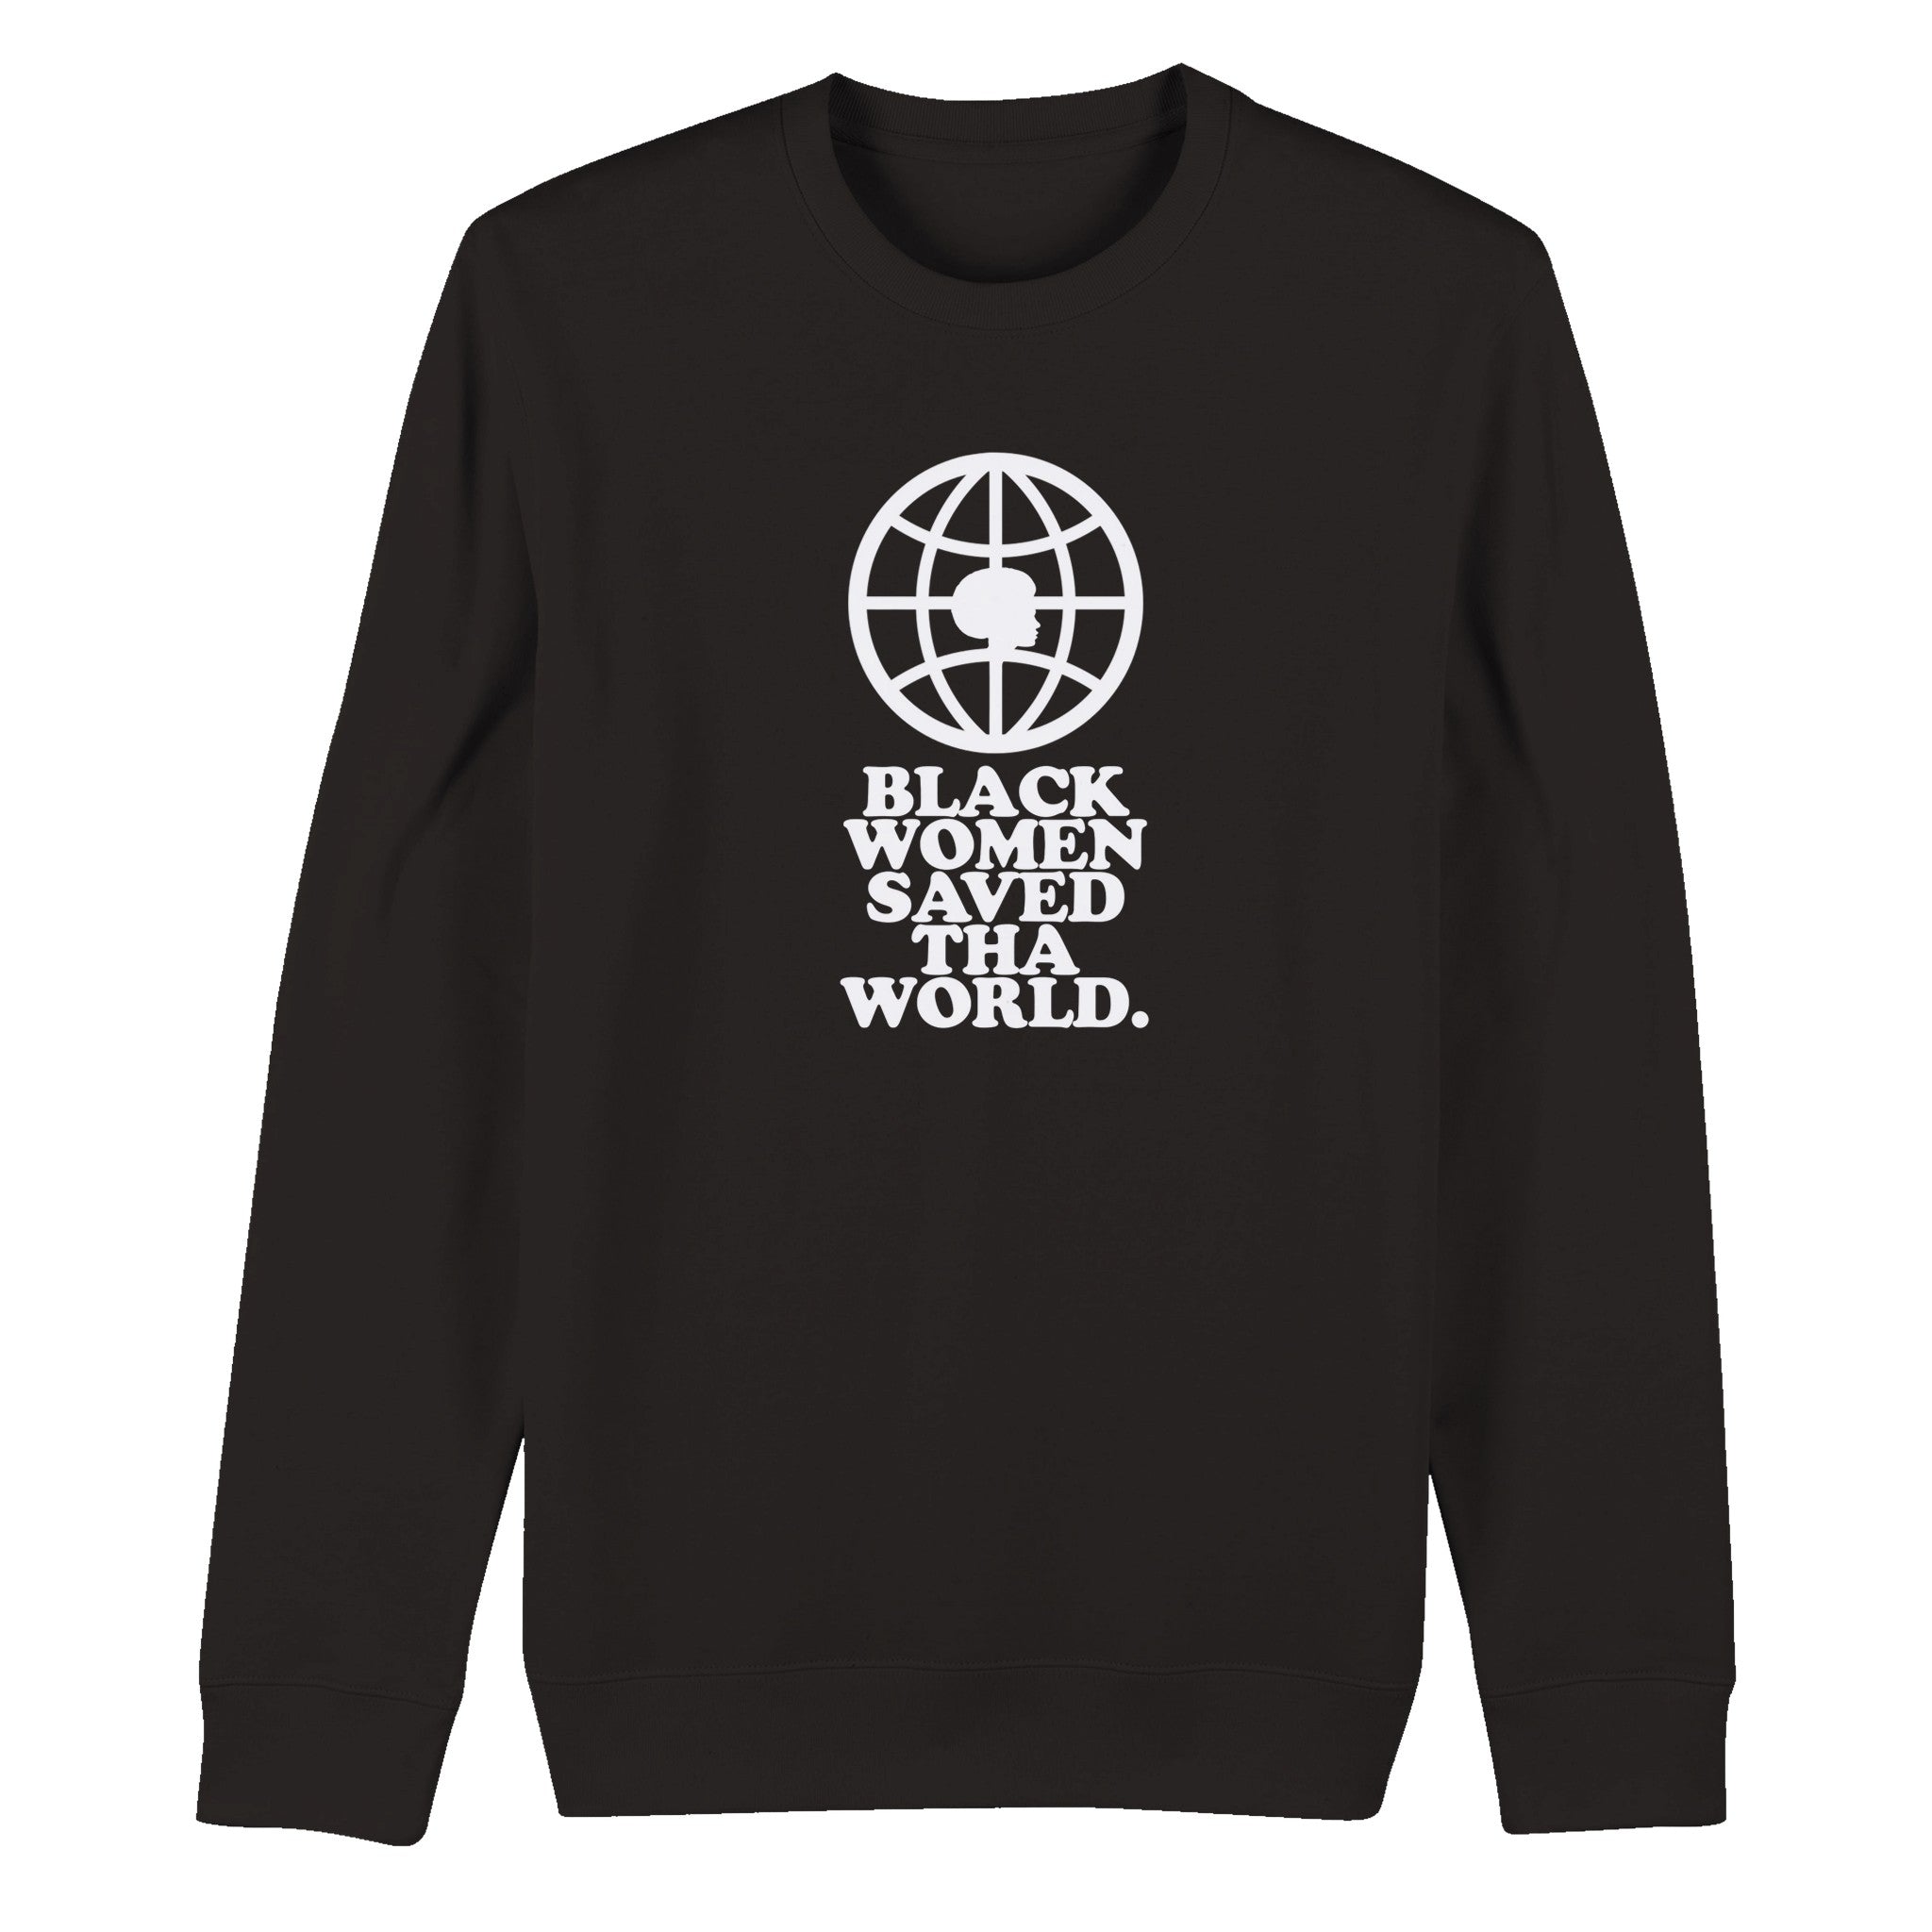 Black Women Saved Tha World Crewneck Sweatshirt